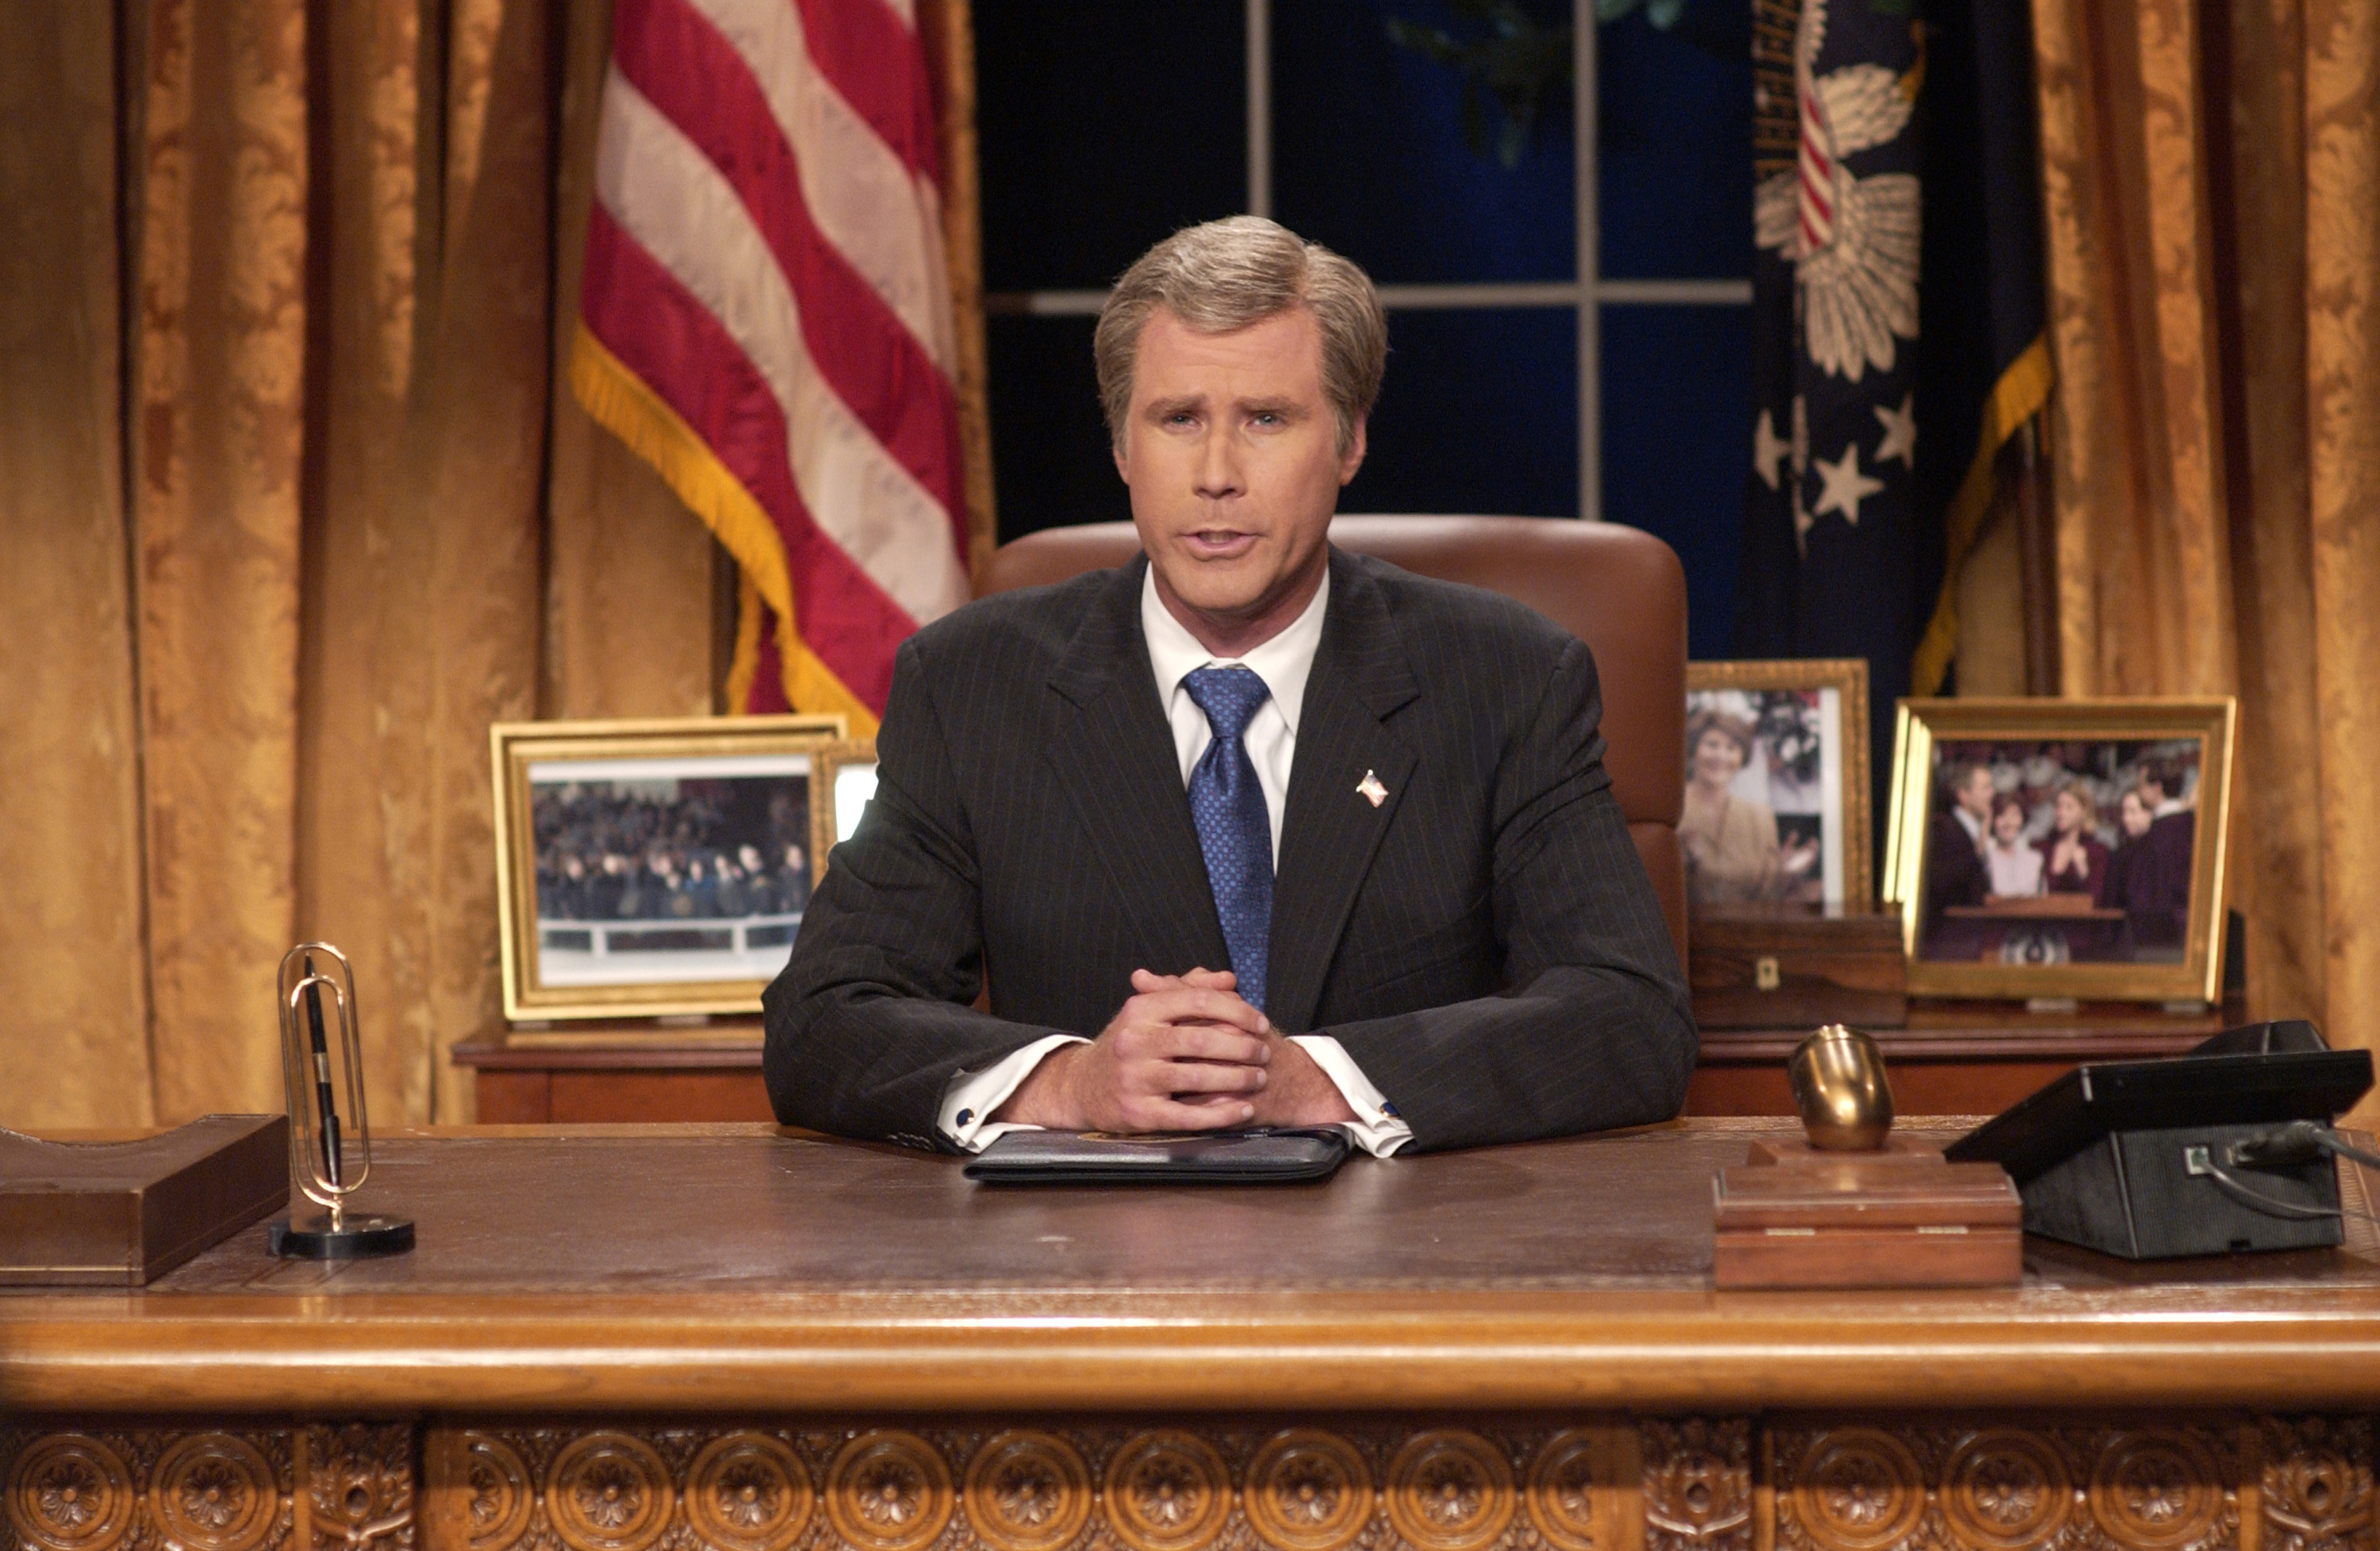 Will Ferrell as President George W. Bush, SNL